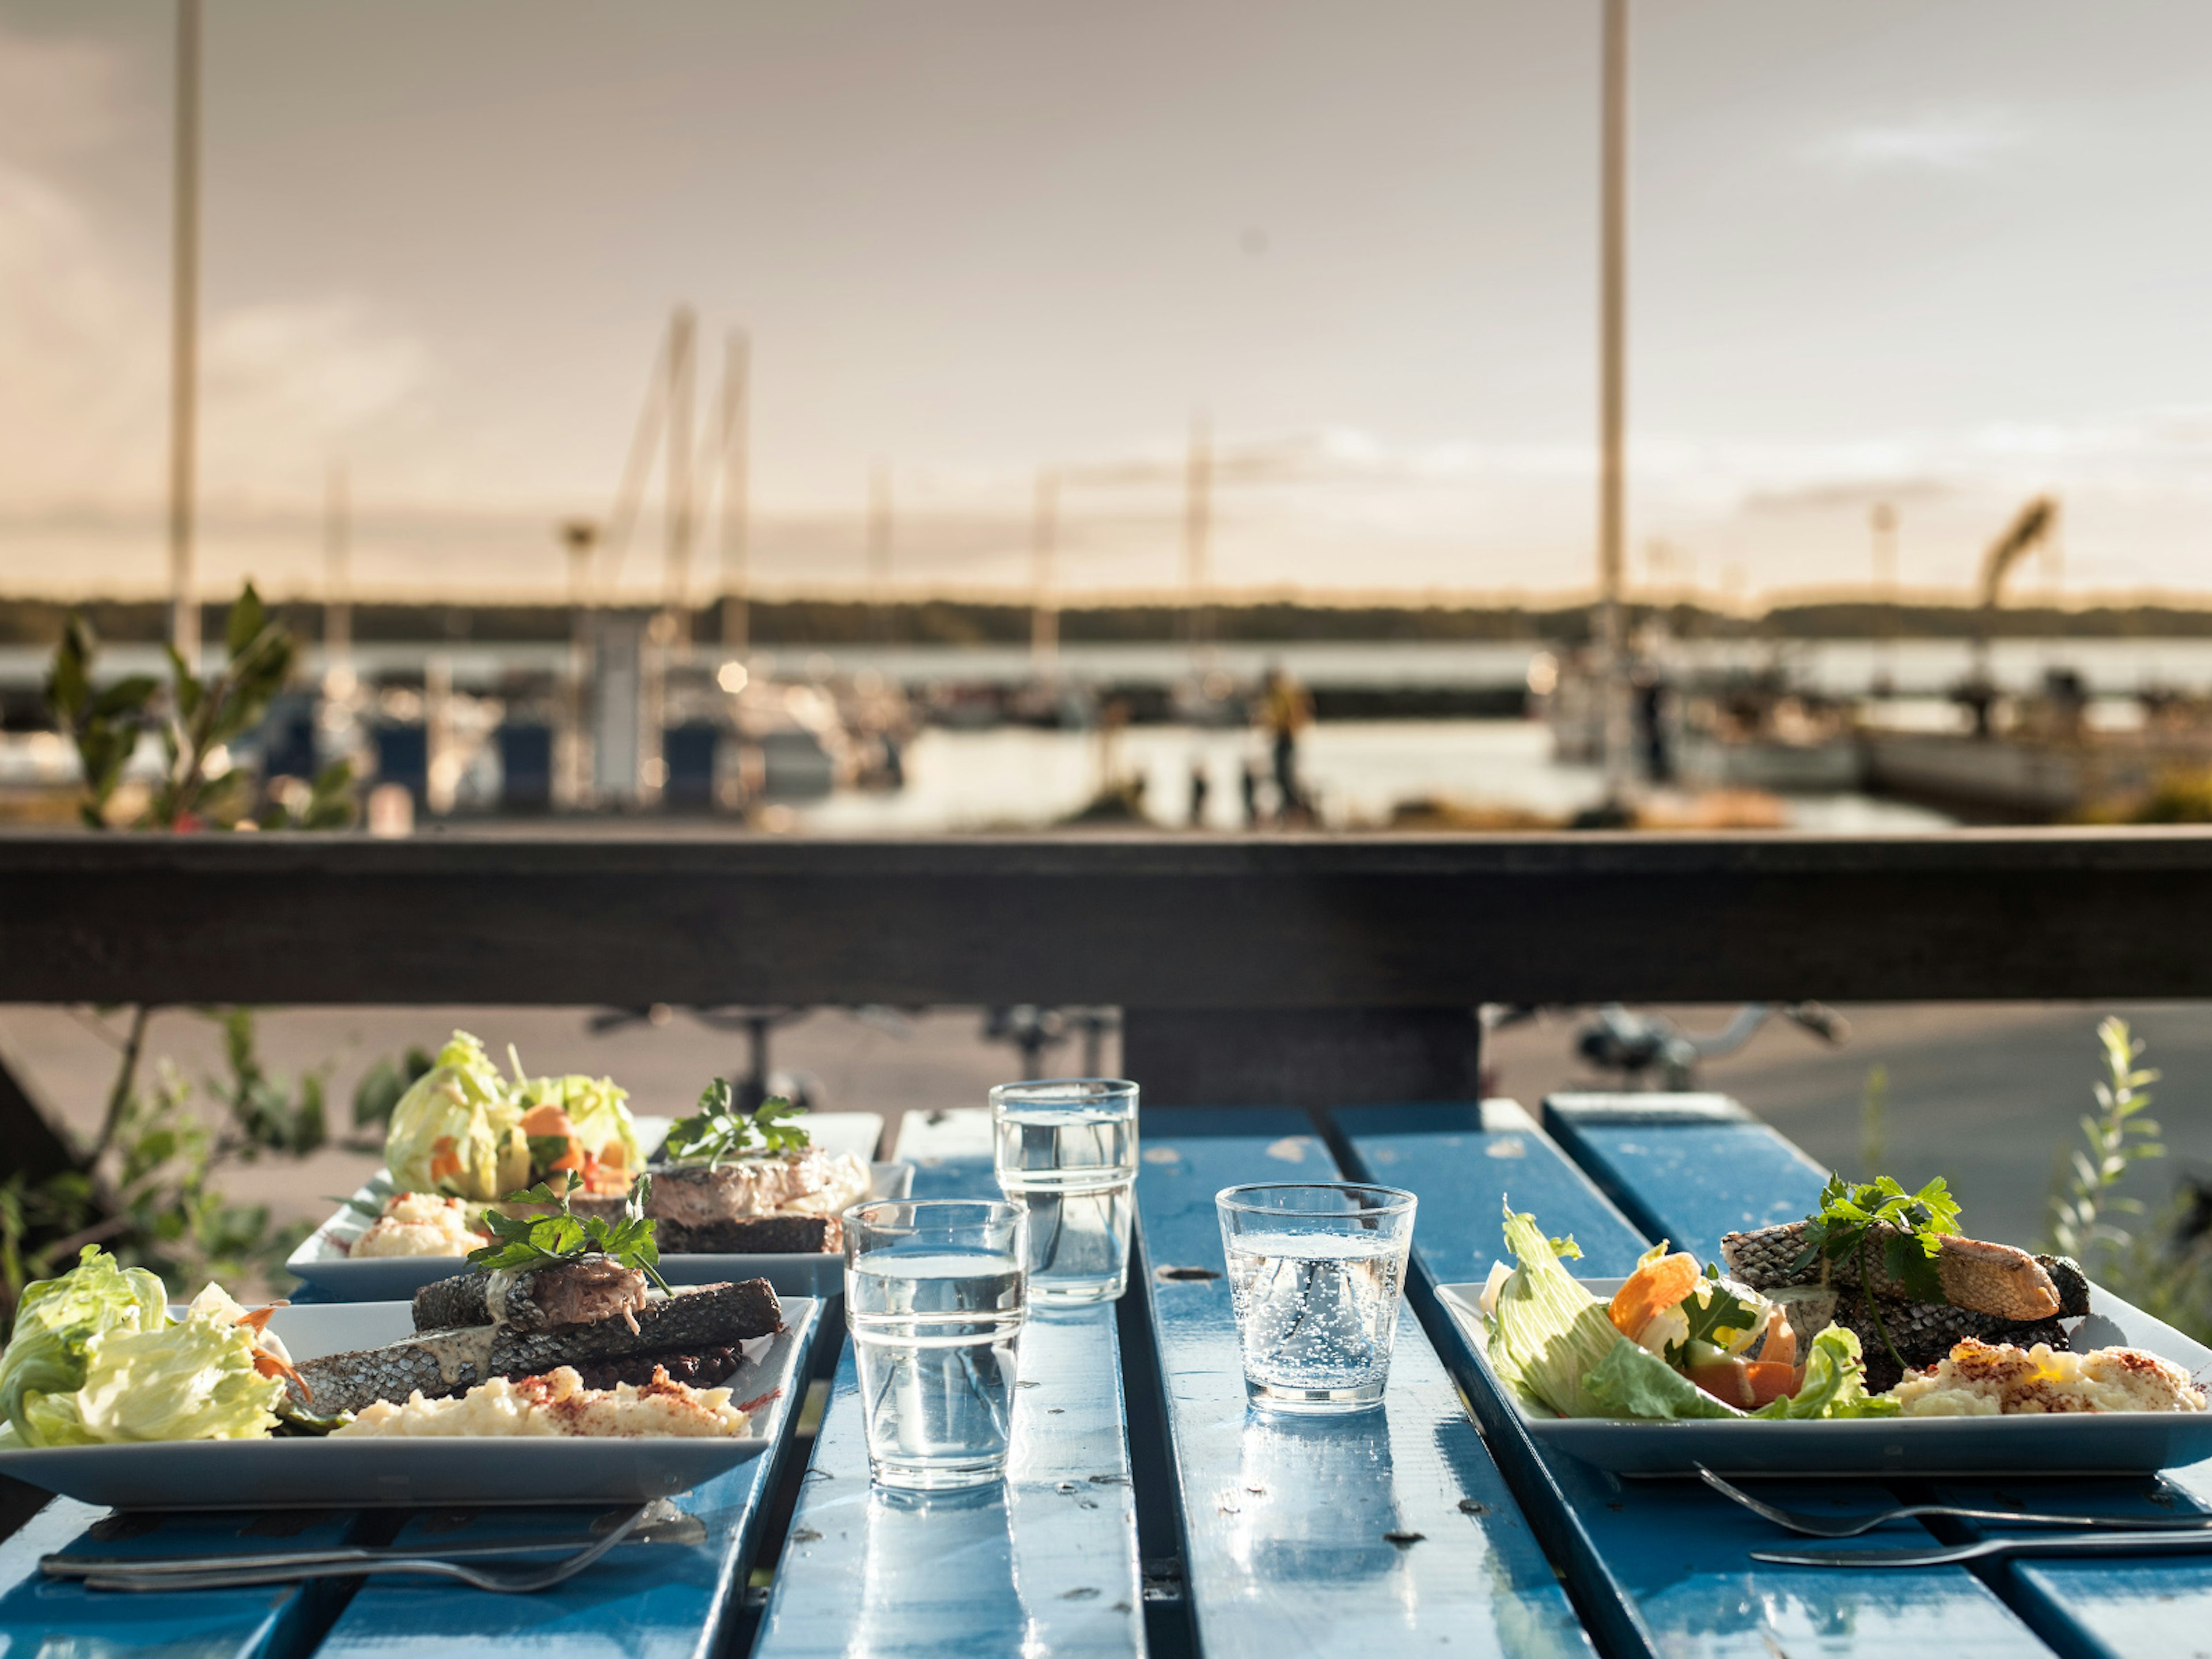 Alfresco dining by the marina in Reykjavík © Antonio Saba / Getty Images